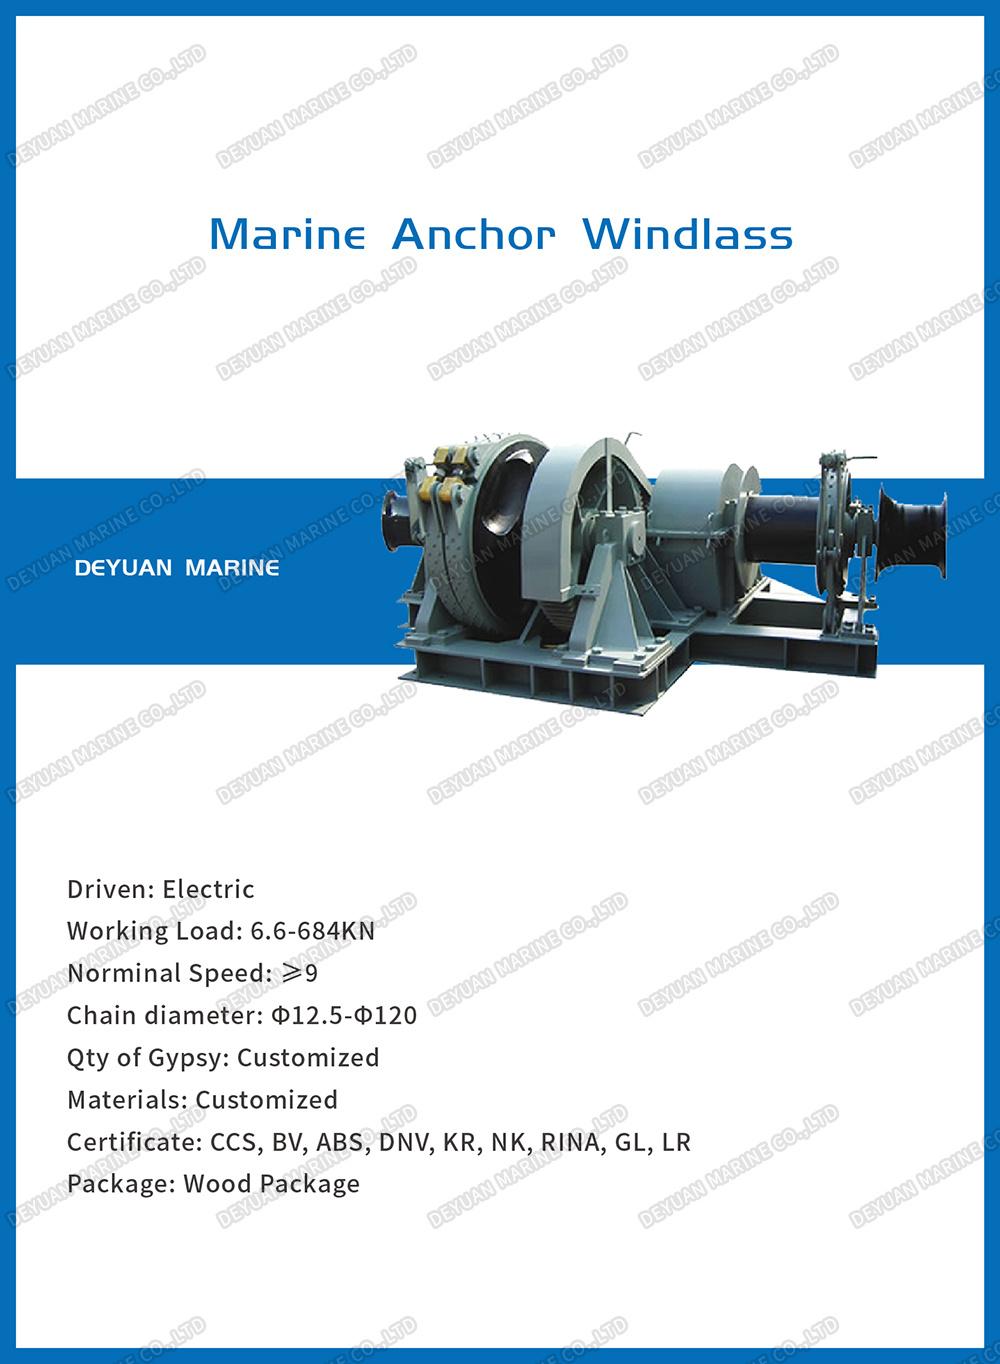 Single Marine Electric Windlass with Warping Drum